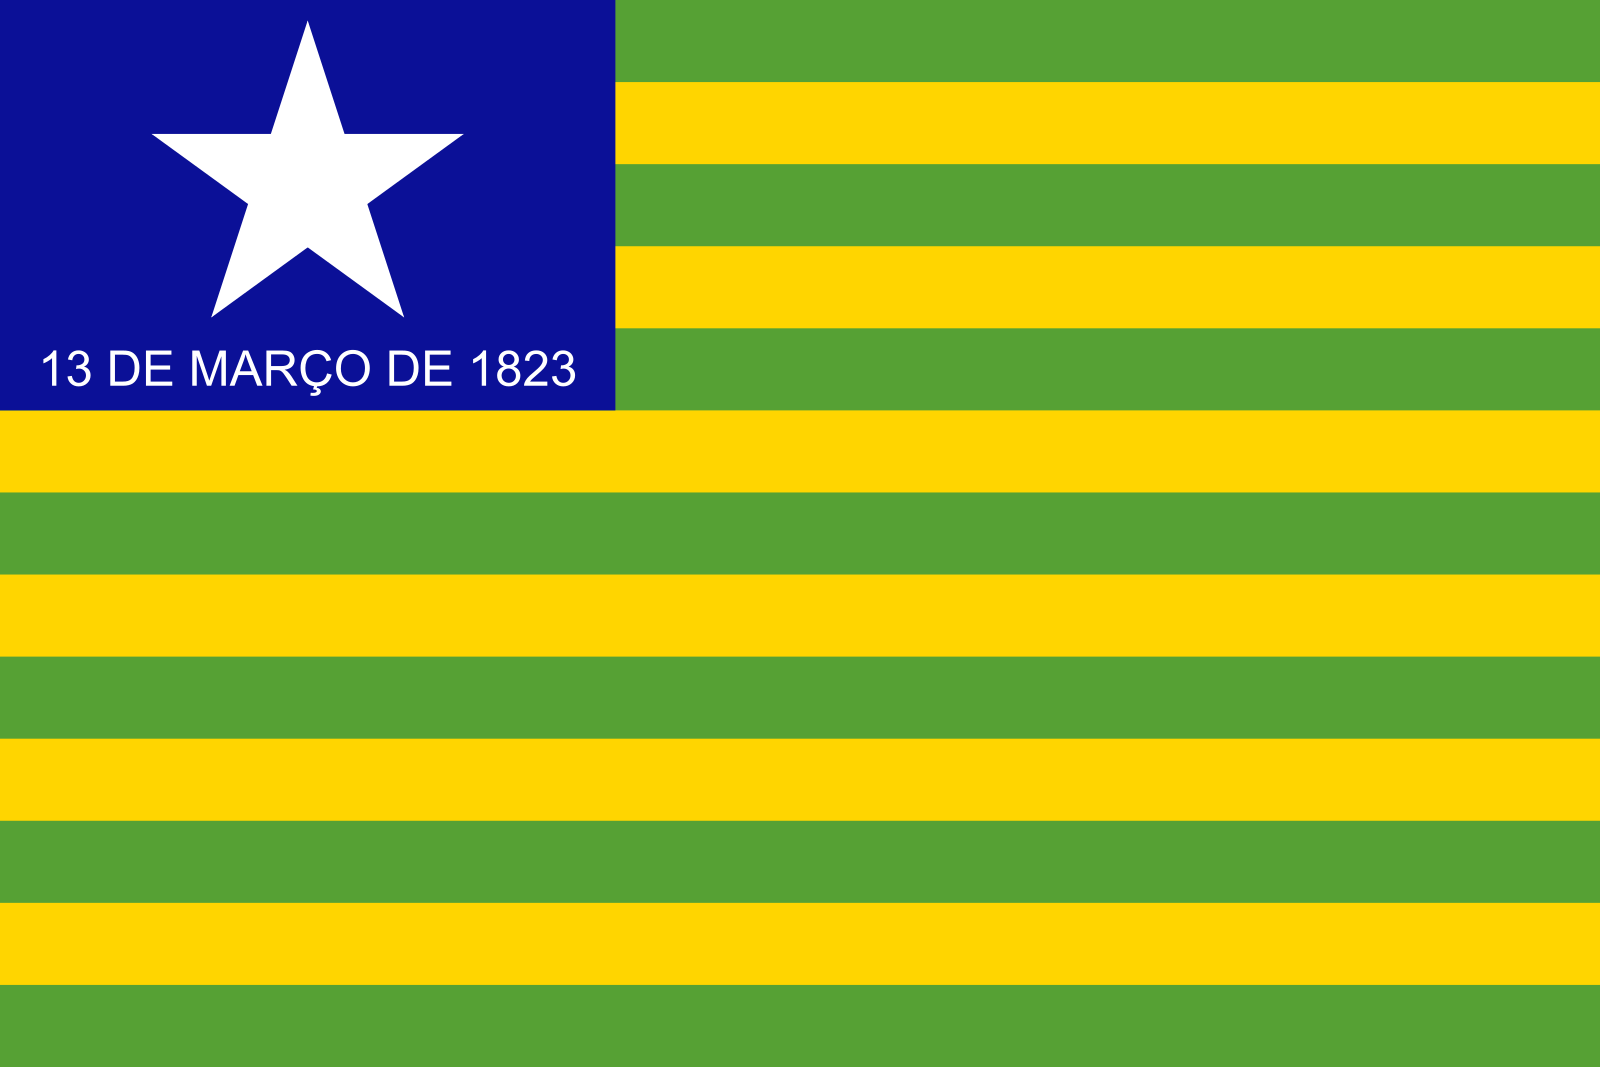 Piauí flag